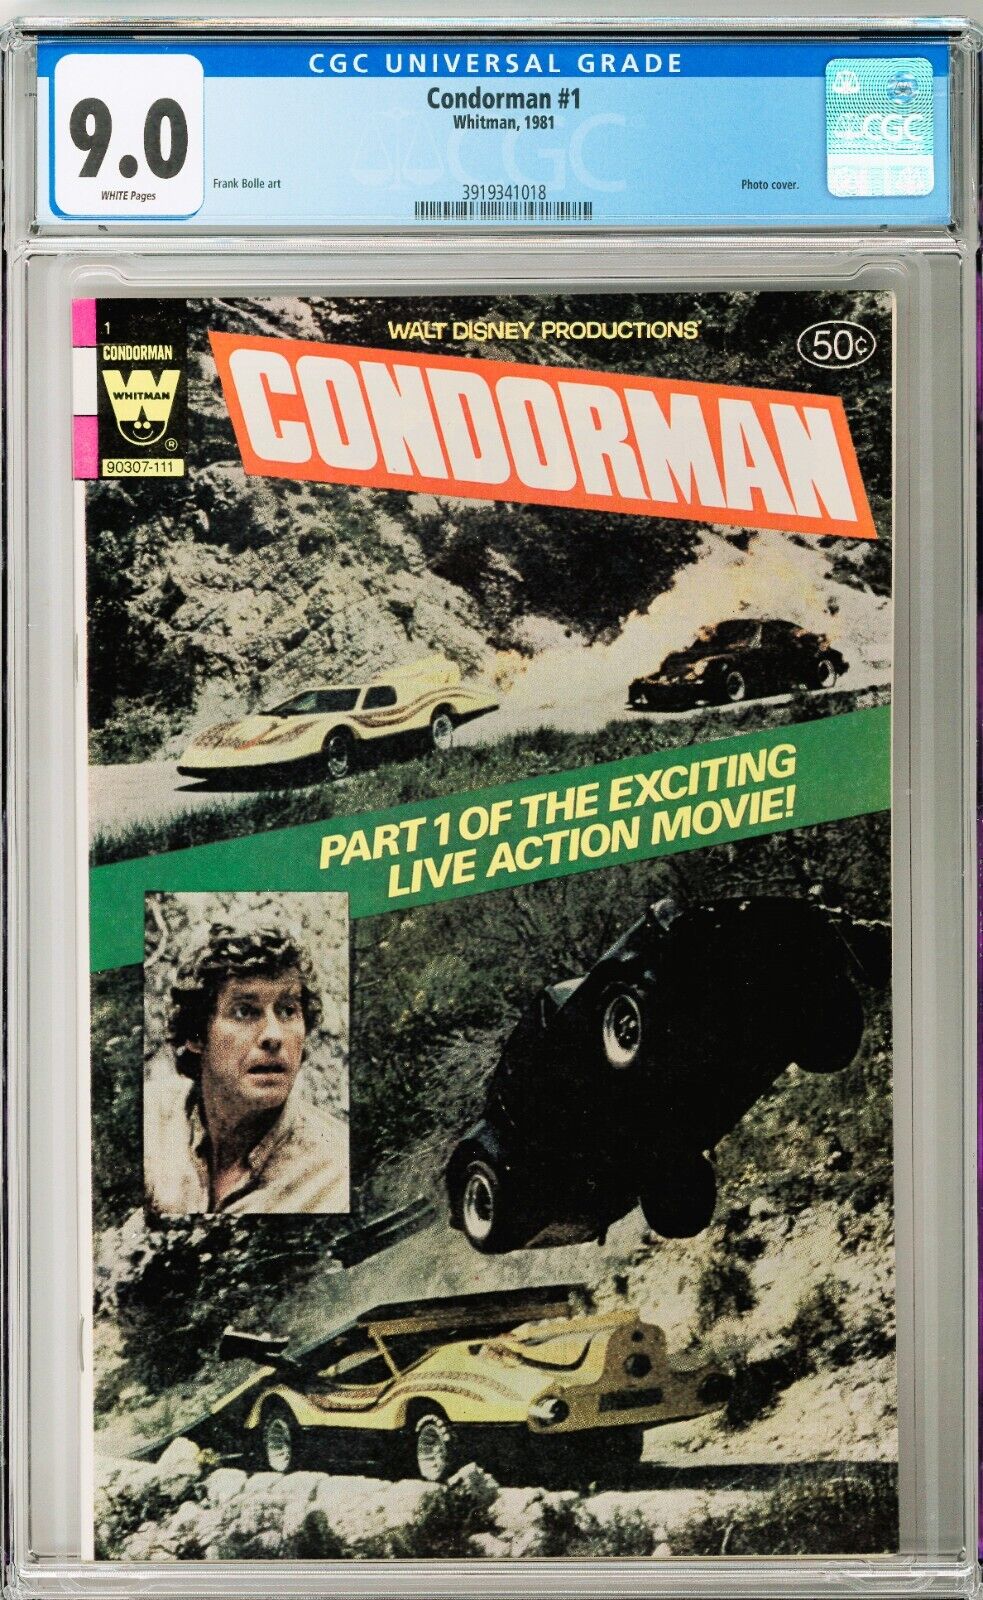 Condorman #1 CGC 9.0 (1981, Whitman) Photo Cover, Frank Bolle art, Disney Movie